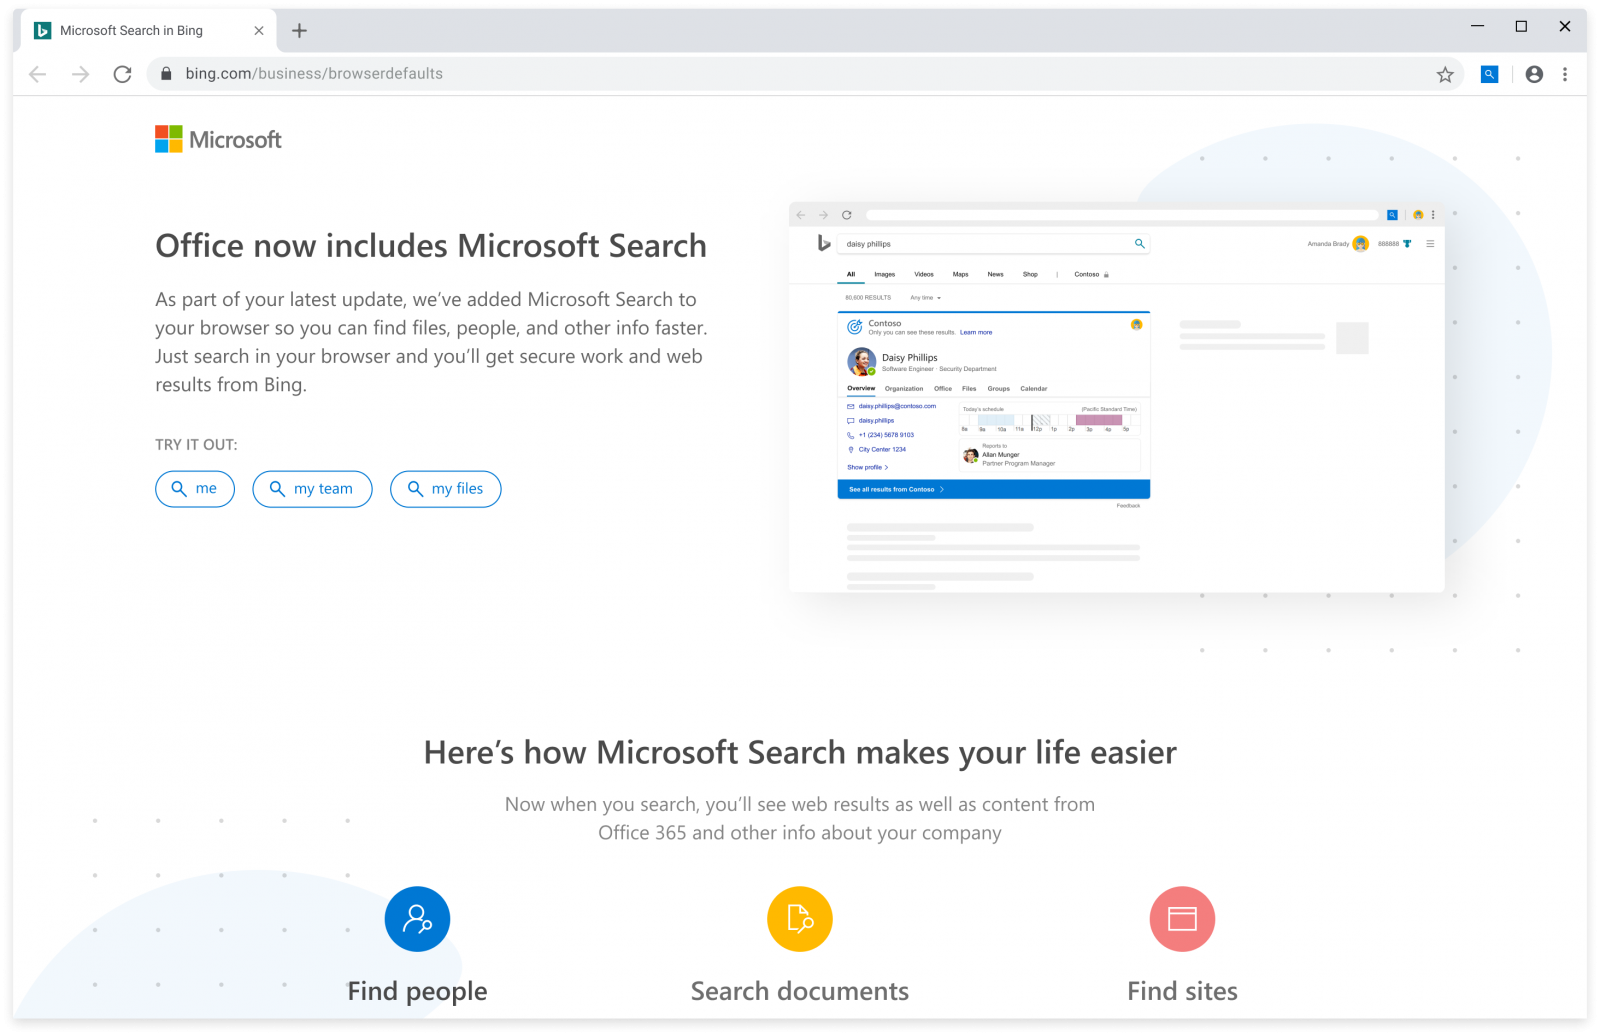 Microsoft Search in Bing welcome screen